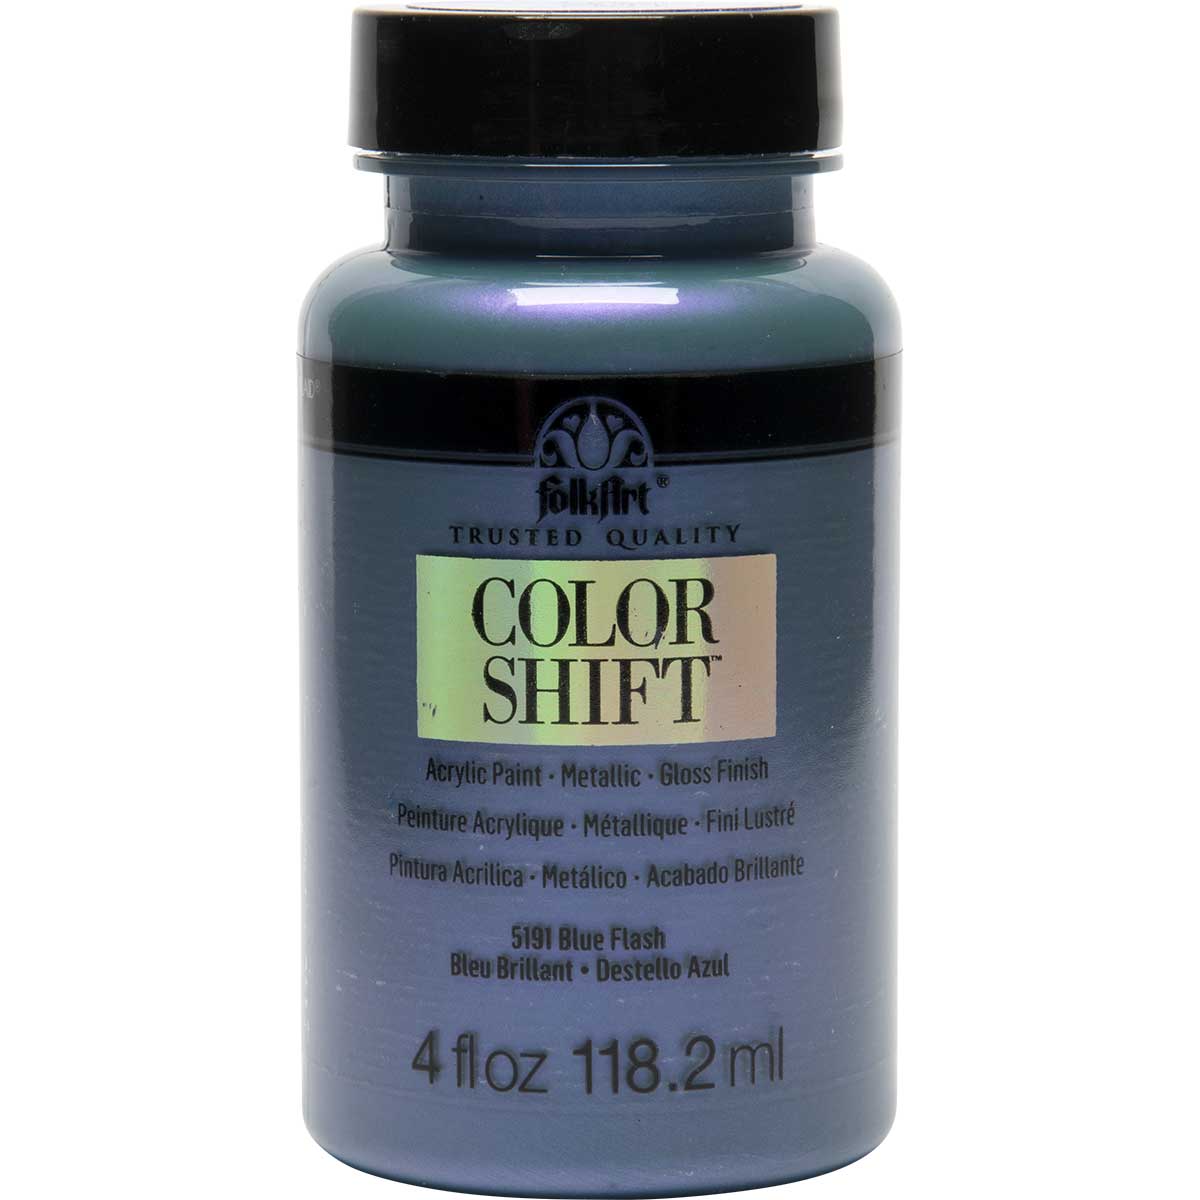 FolkArt ® Color Shift™ Acrylic Paint - Blue Flash, 4 oz. - 5191